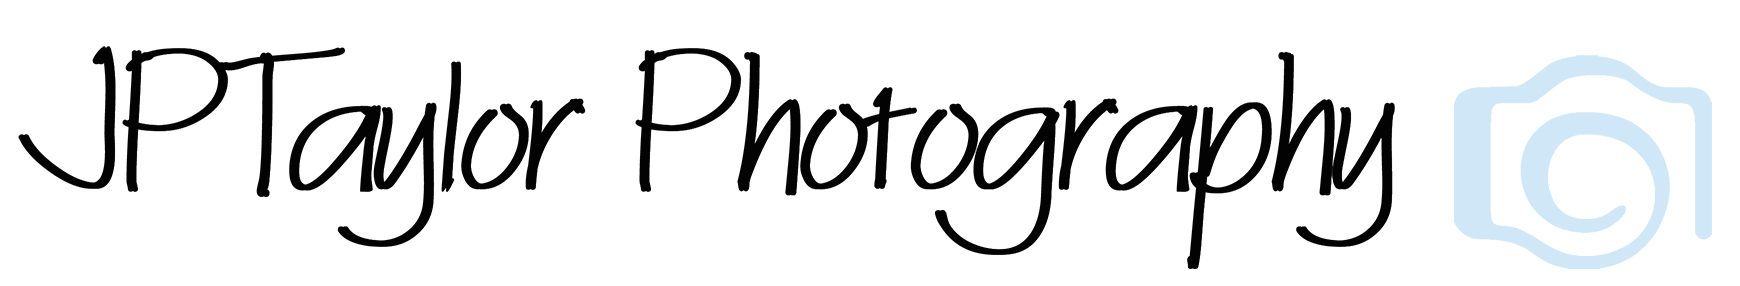 Commercial-Photography-Logo-jptaylorphotography.com